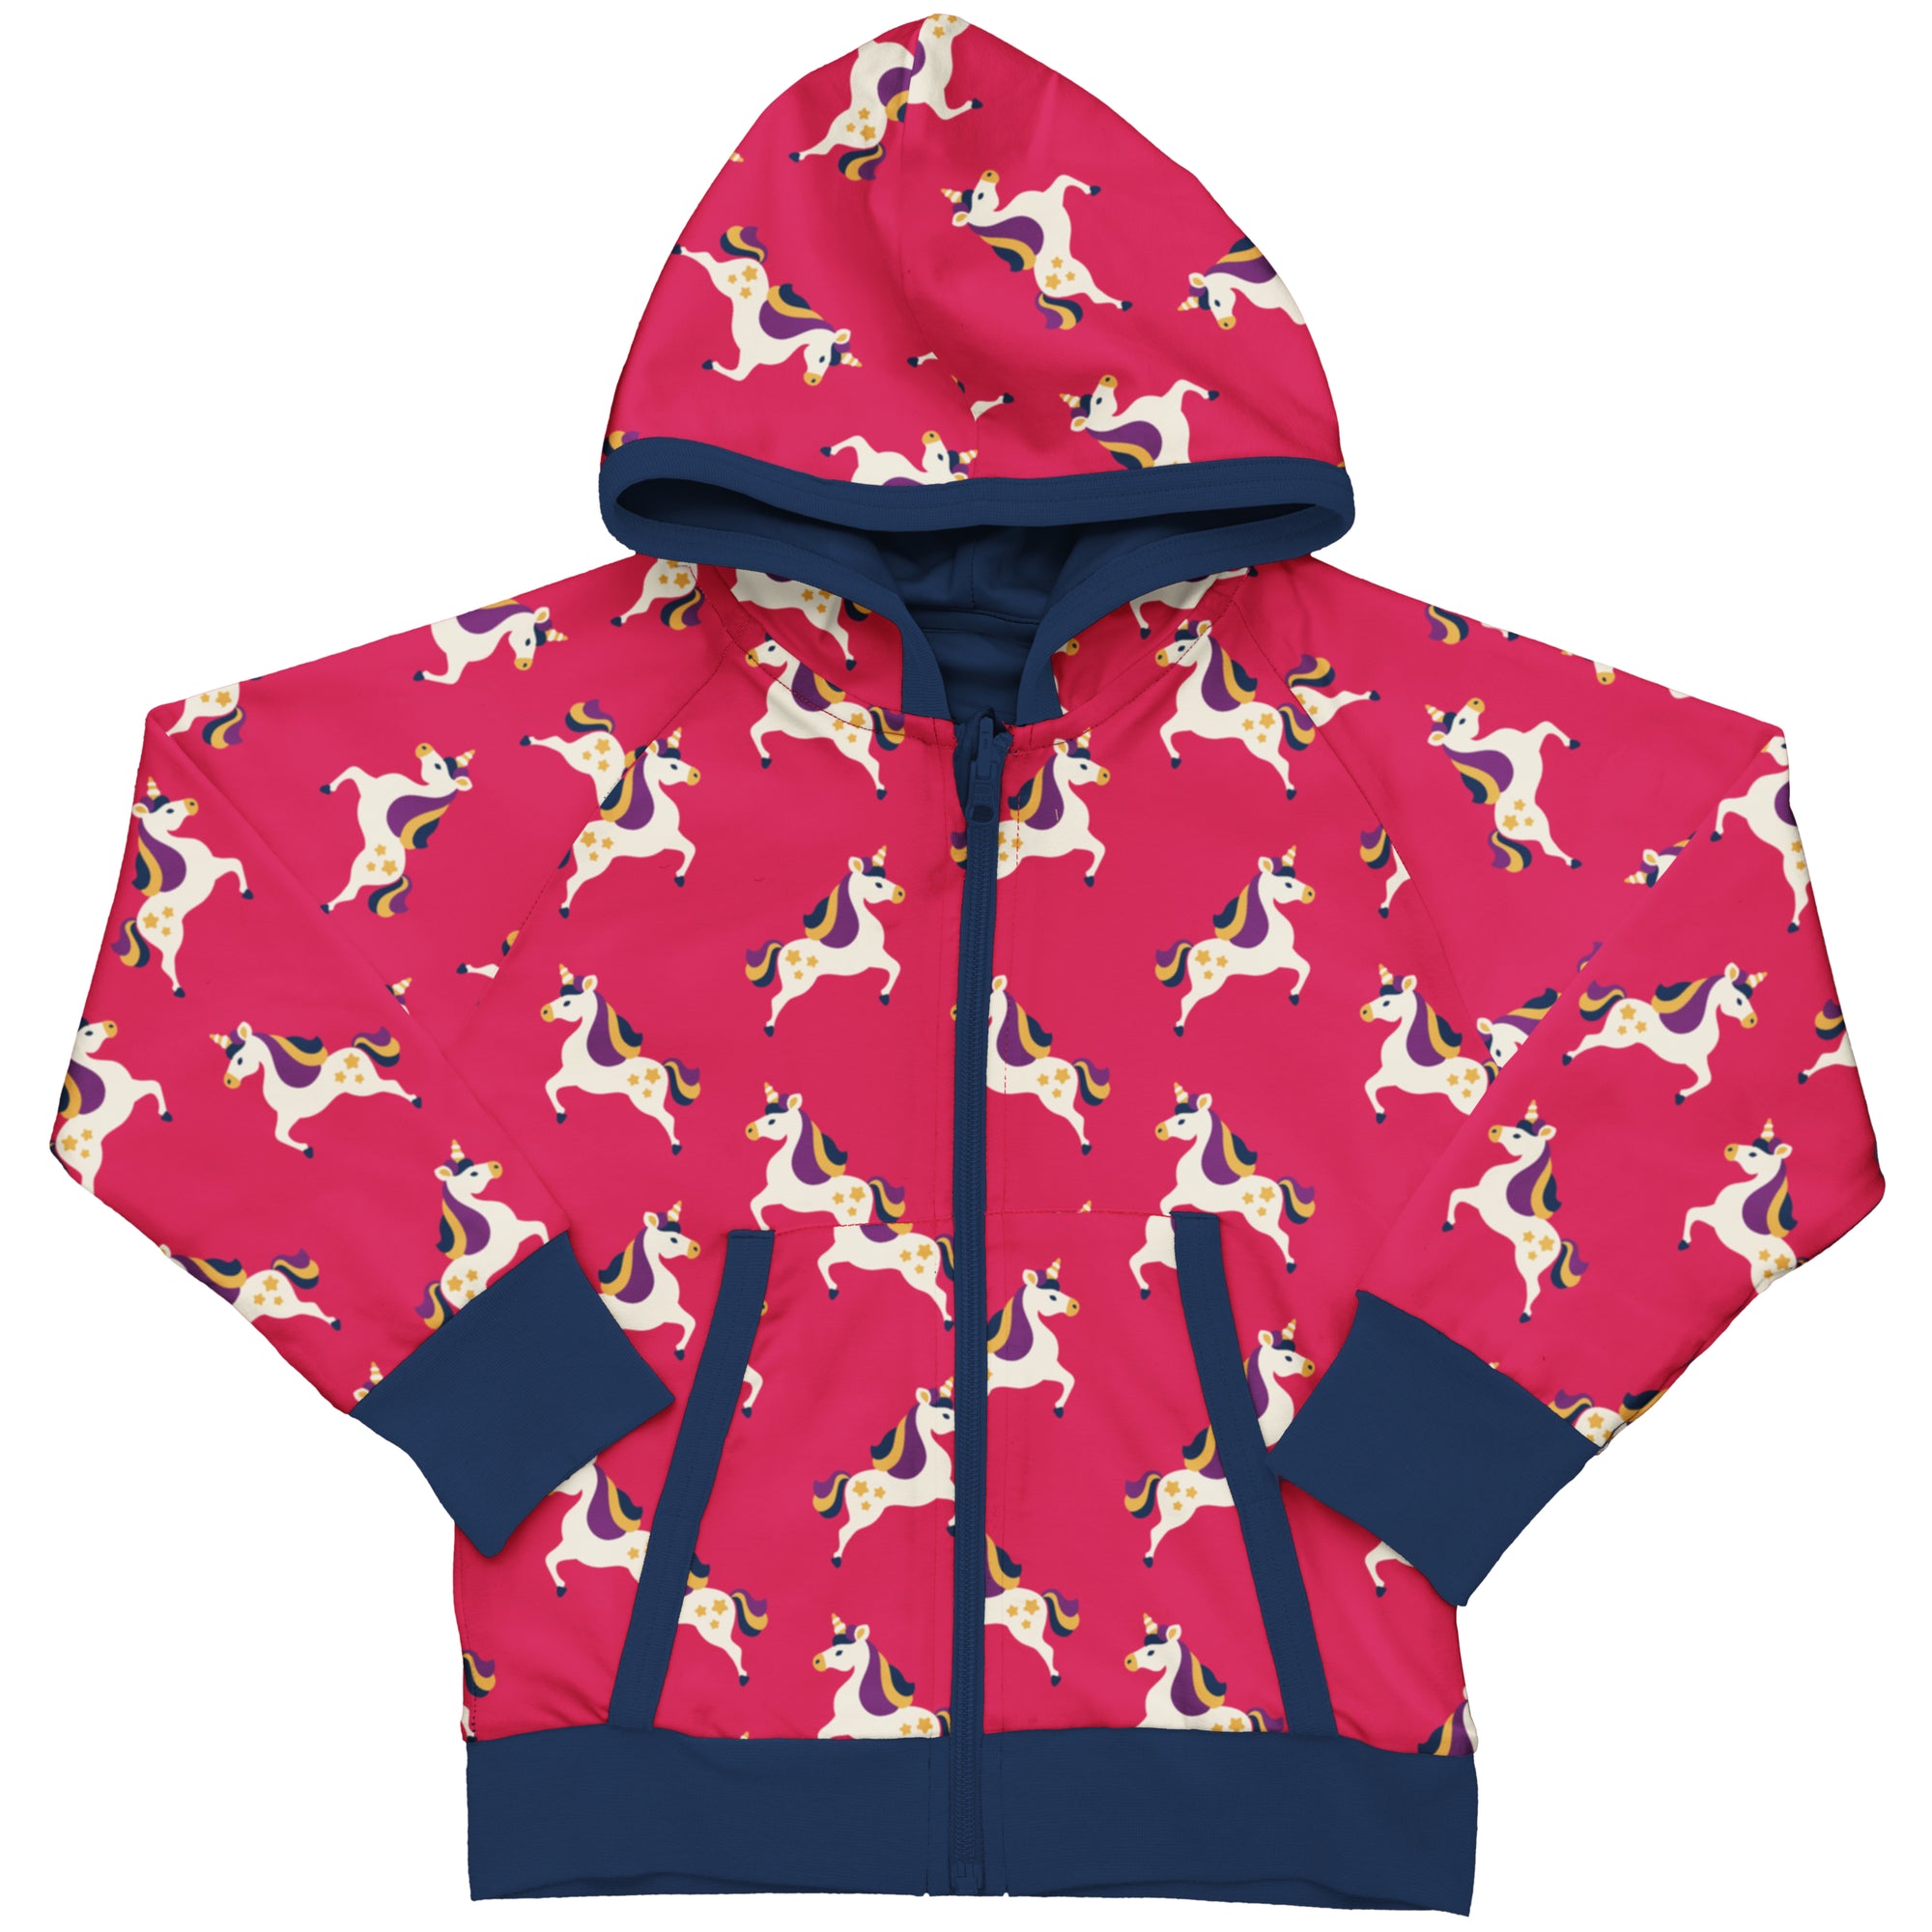 Maxomorra Unicorn Reversible Hooded Sweatshirt Sxa2302 Pink Clothing 3-4YRS / Pink,5-6YRS / Pink,7-8YRS / Pink,9-10YRS / Pink,1-2 YRS / Pink